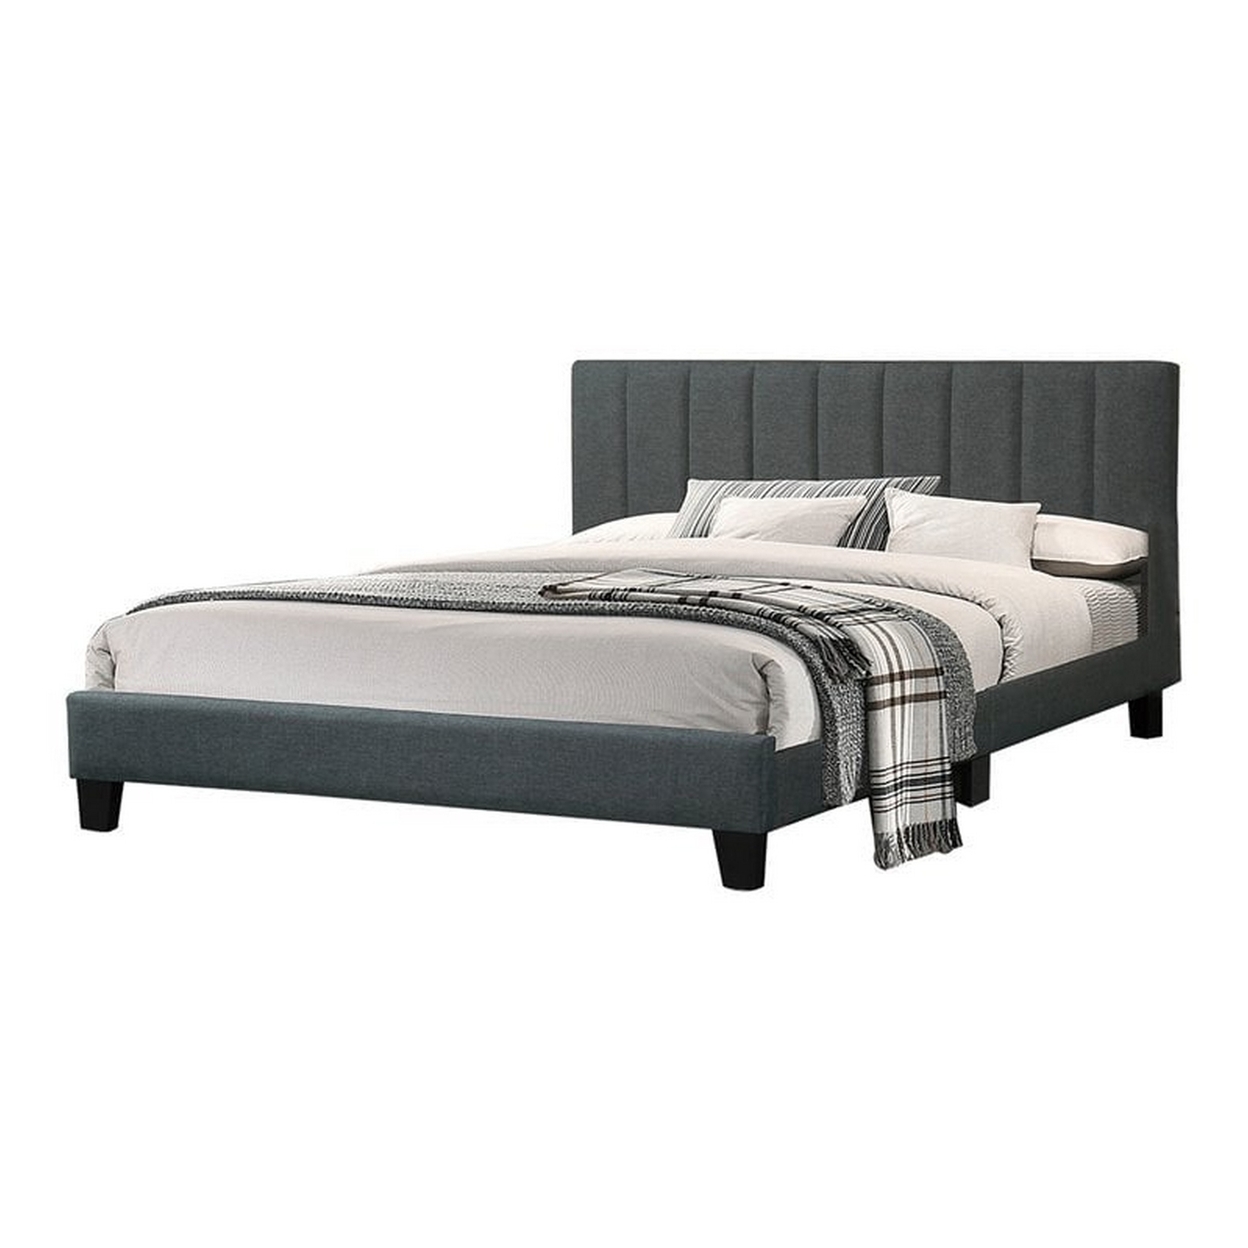 Dex Modern Platform Full Size Bed, Plush Tufted Upholstery, Charcoal Gray- Saltoro Sherpi